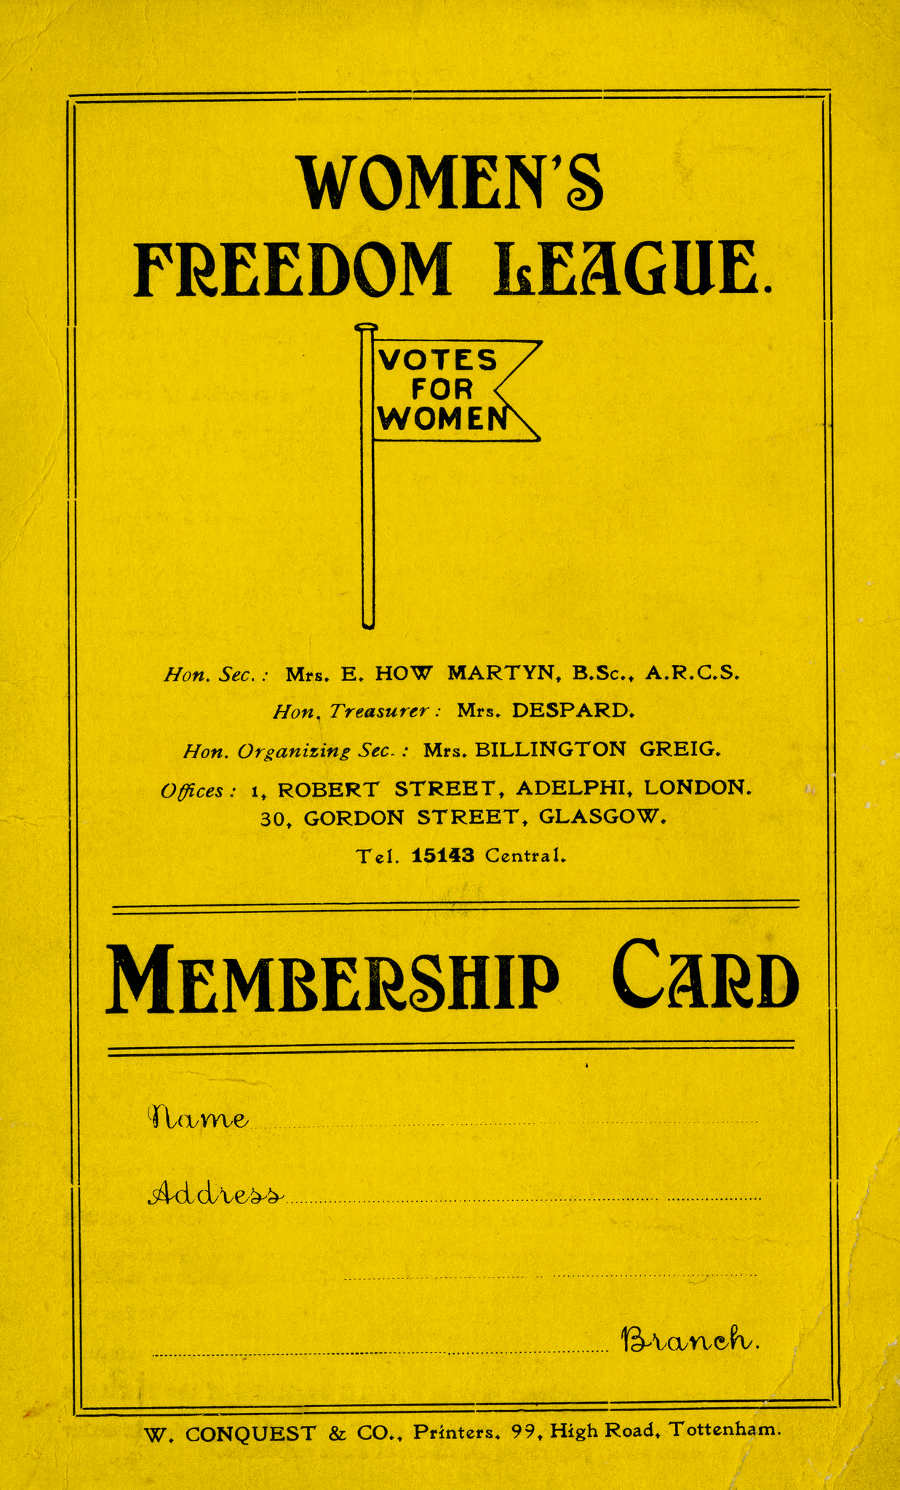 Image of a yellow Women’s Freedom League membership card.